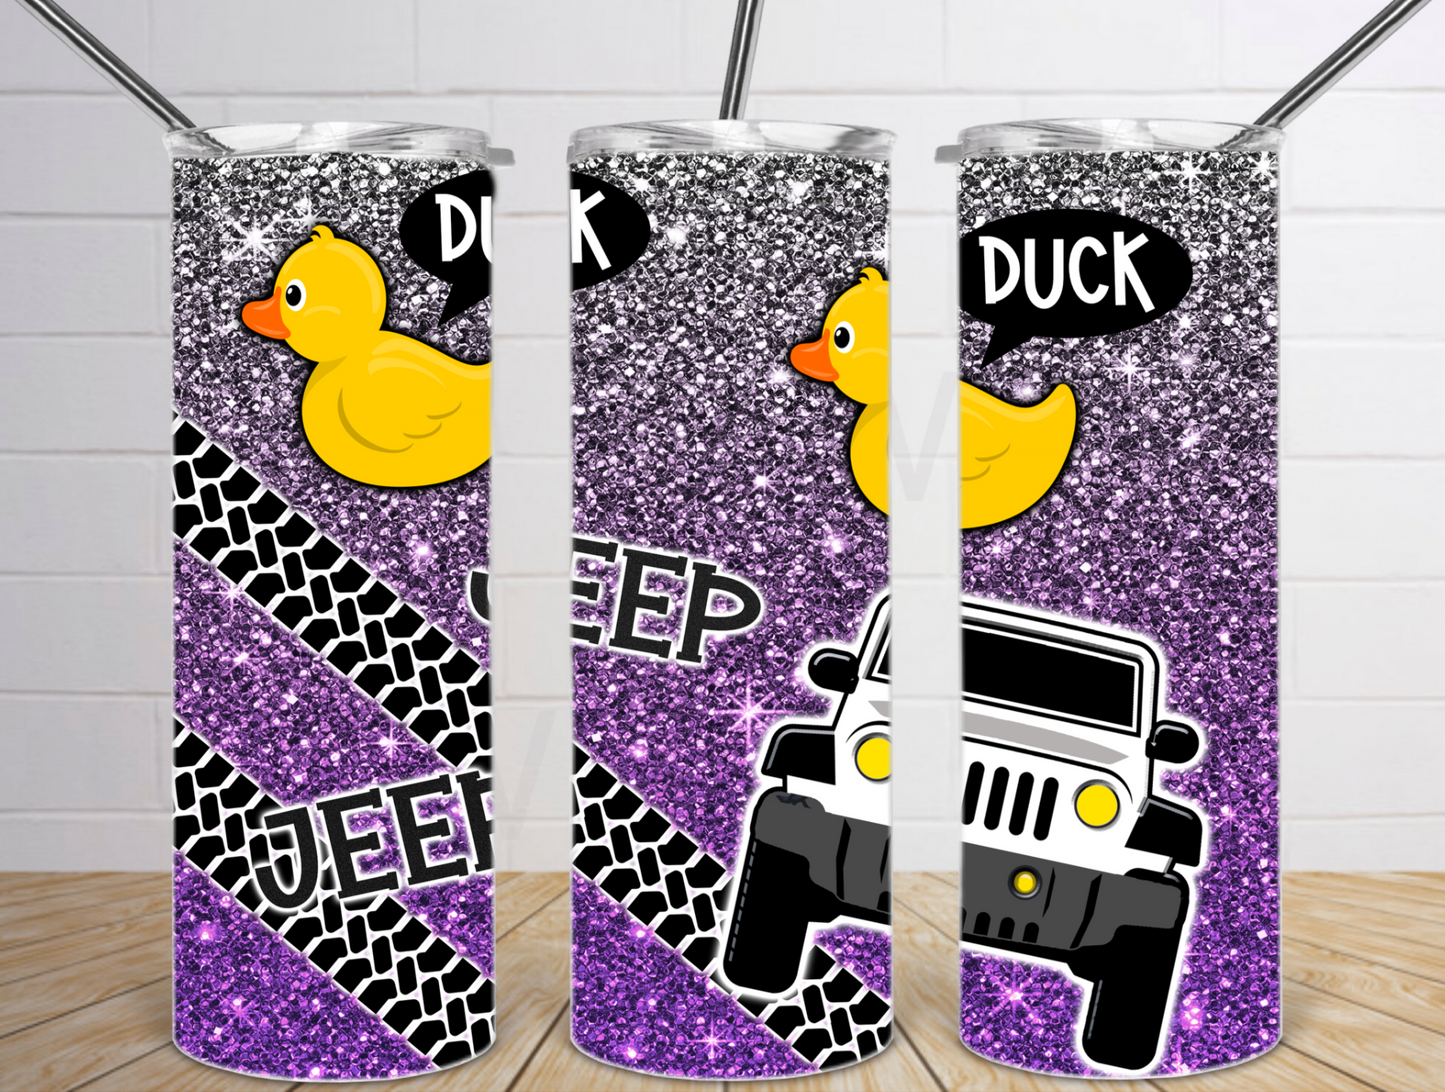 DUCK DUCK Tumbler Wrap JEEP Tumbler Sublimation Design Digital Download png duck duck jeep png